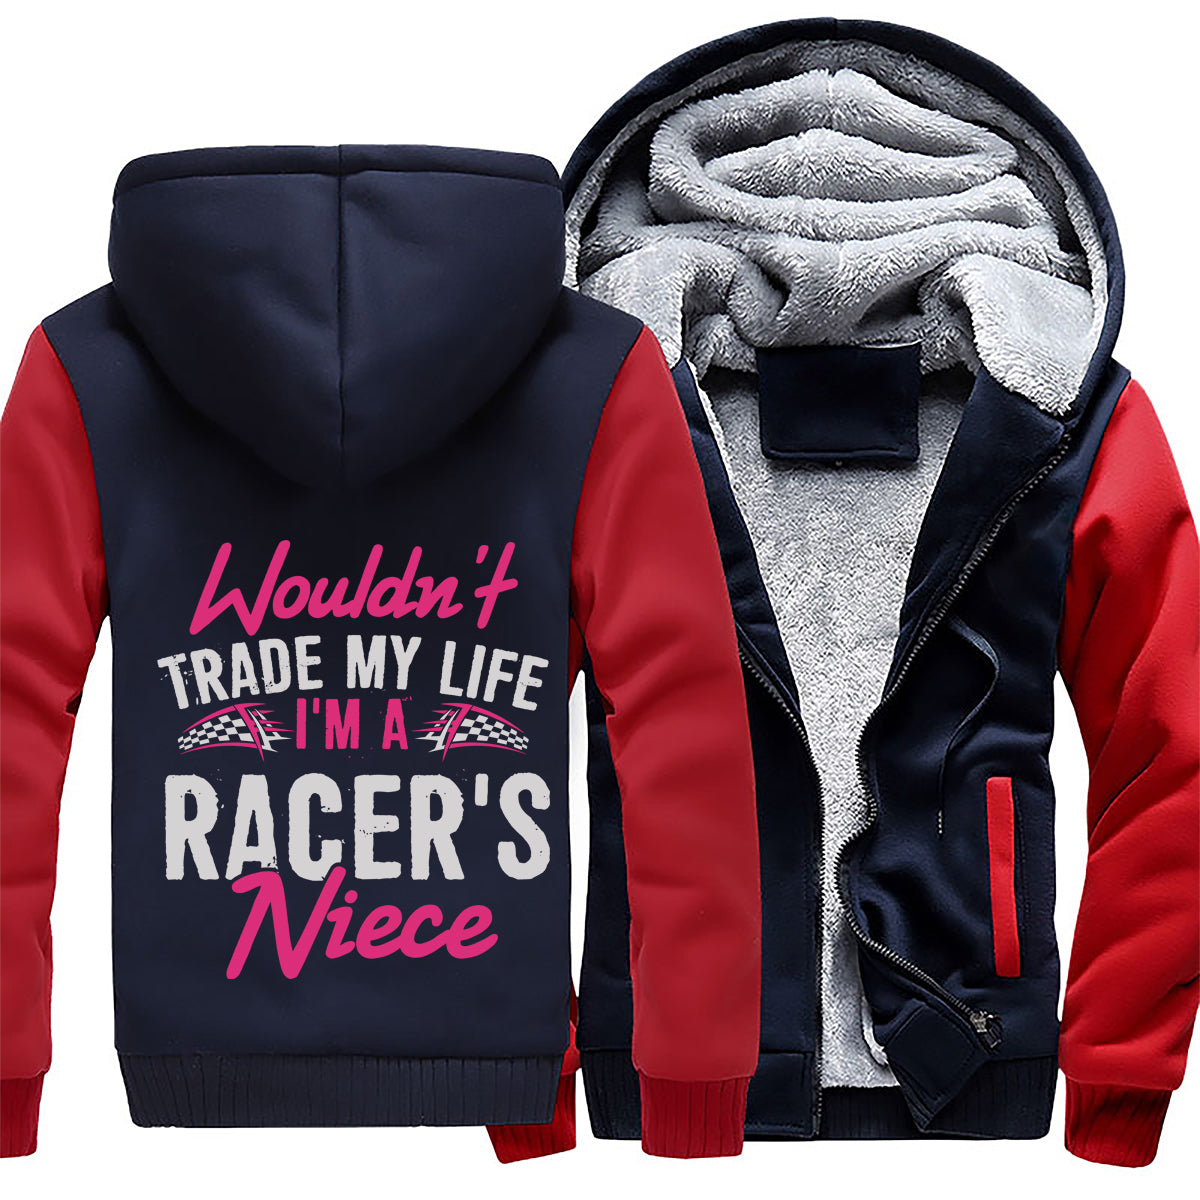 I'm A Racer's Niece Jacket 